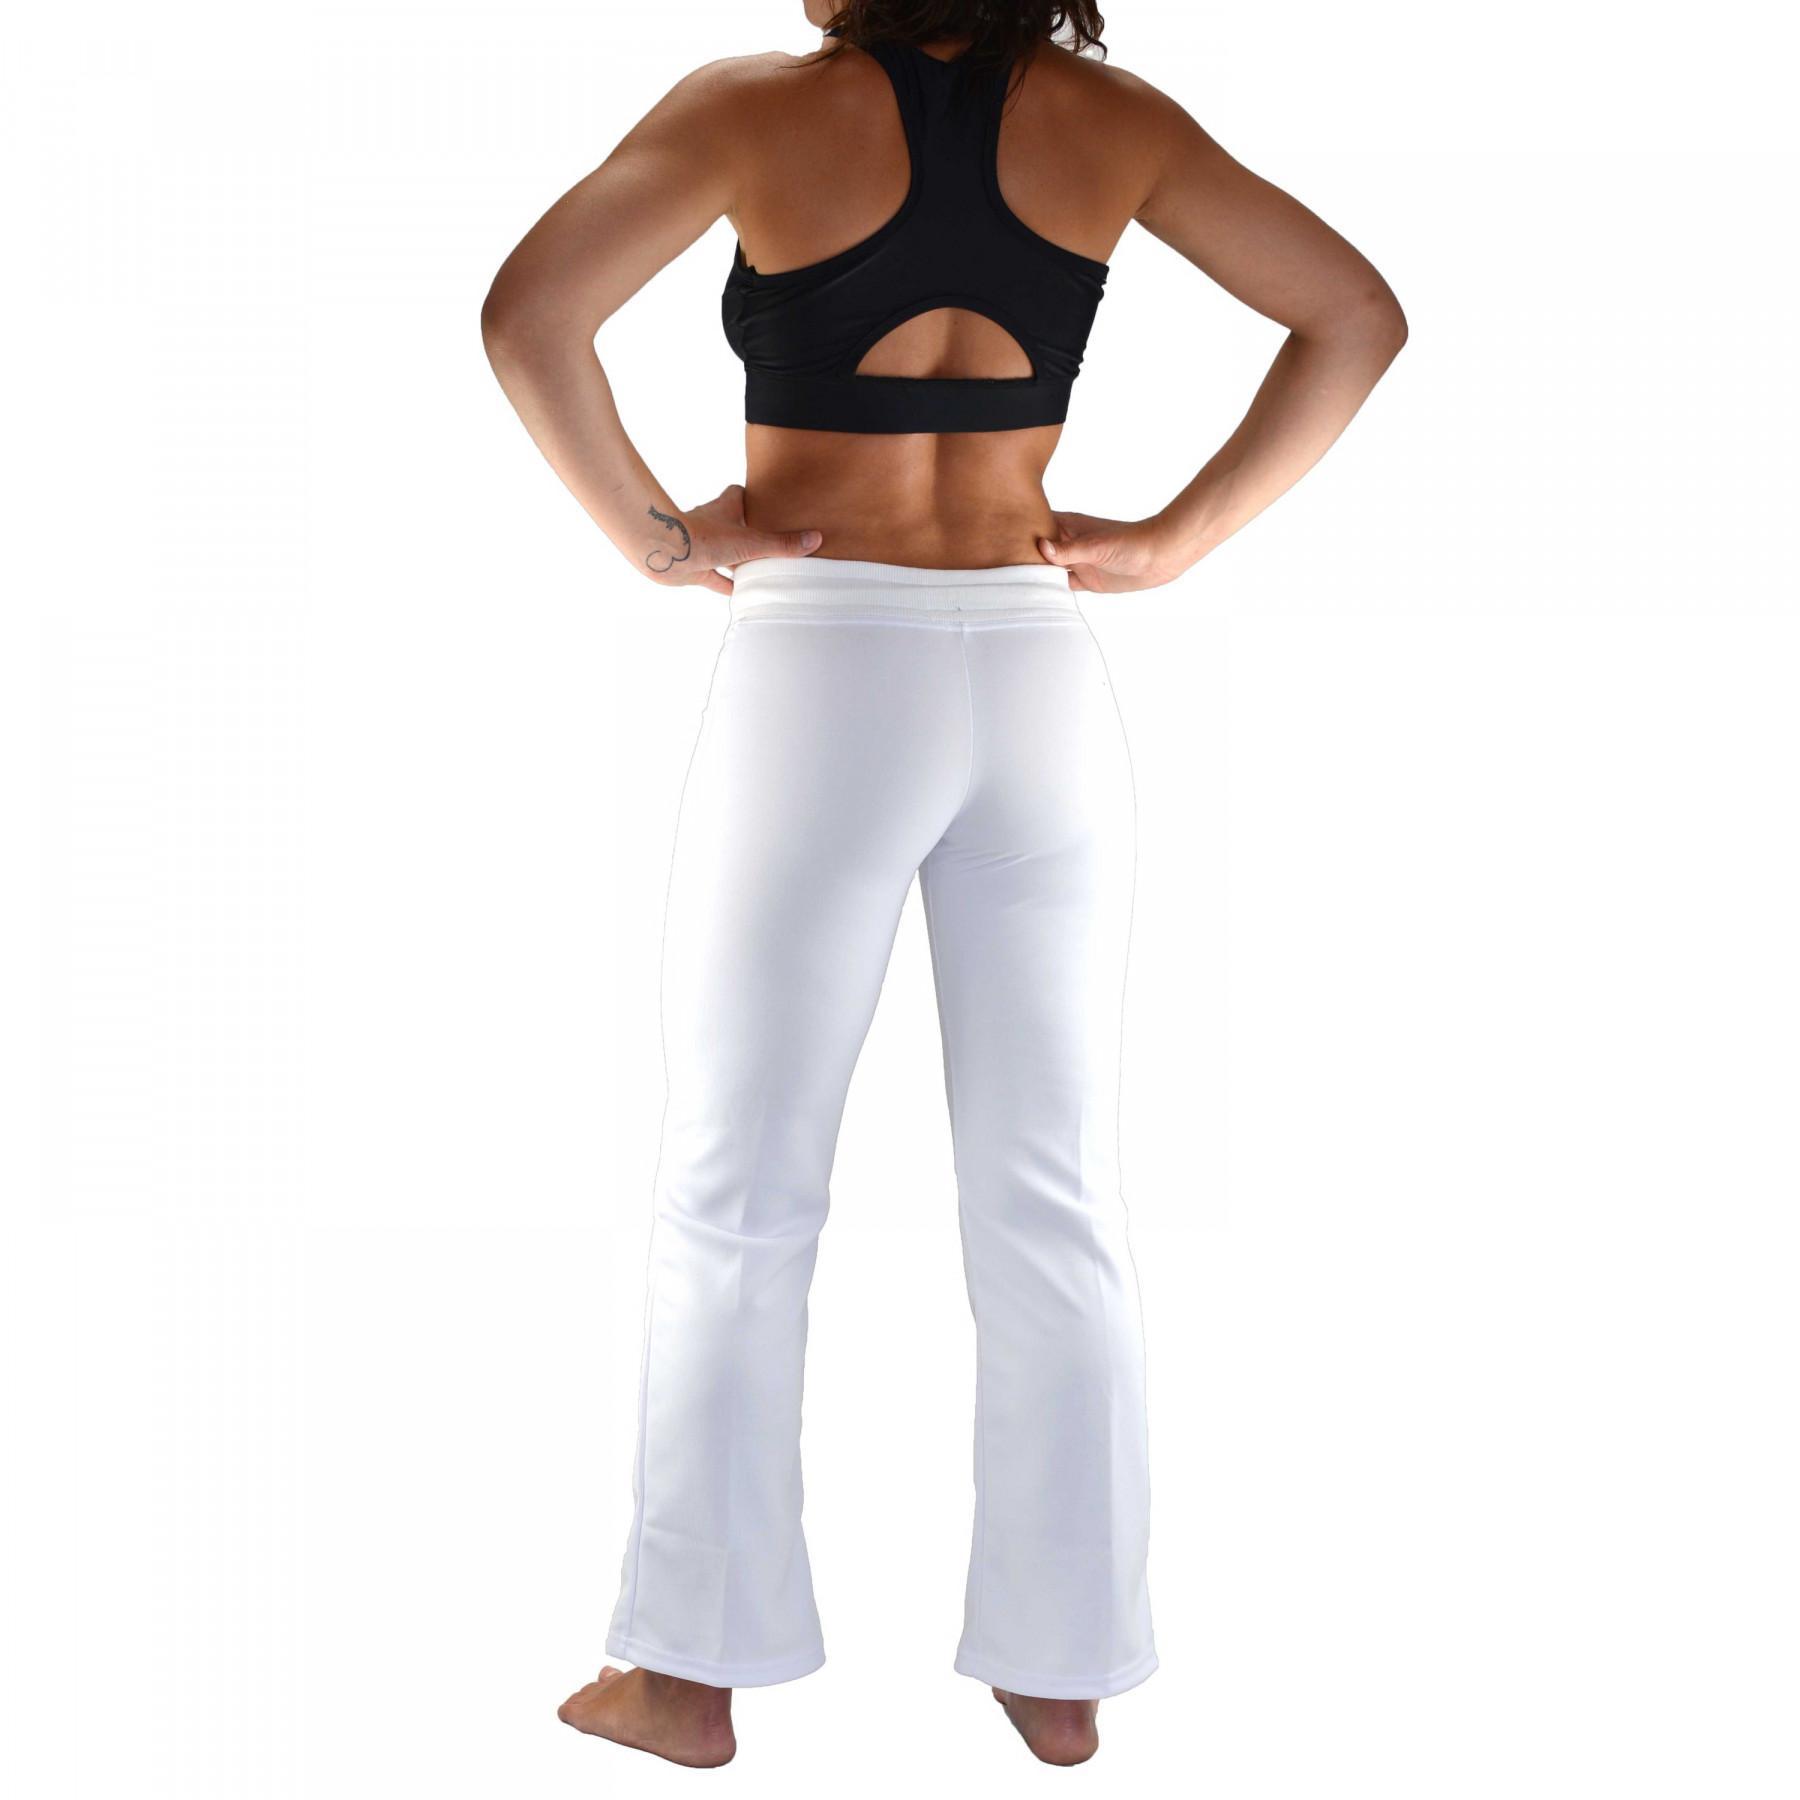 Spodnie capoeira dla kobiet Bõa Estilo